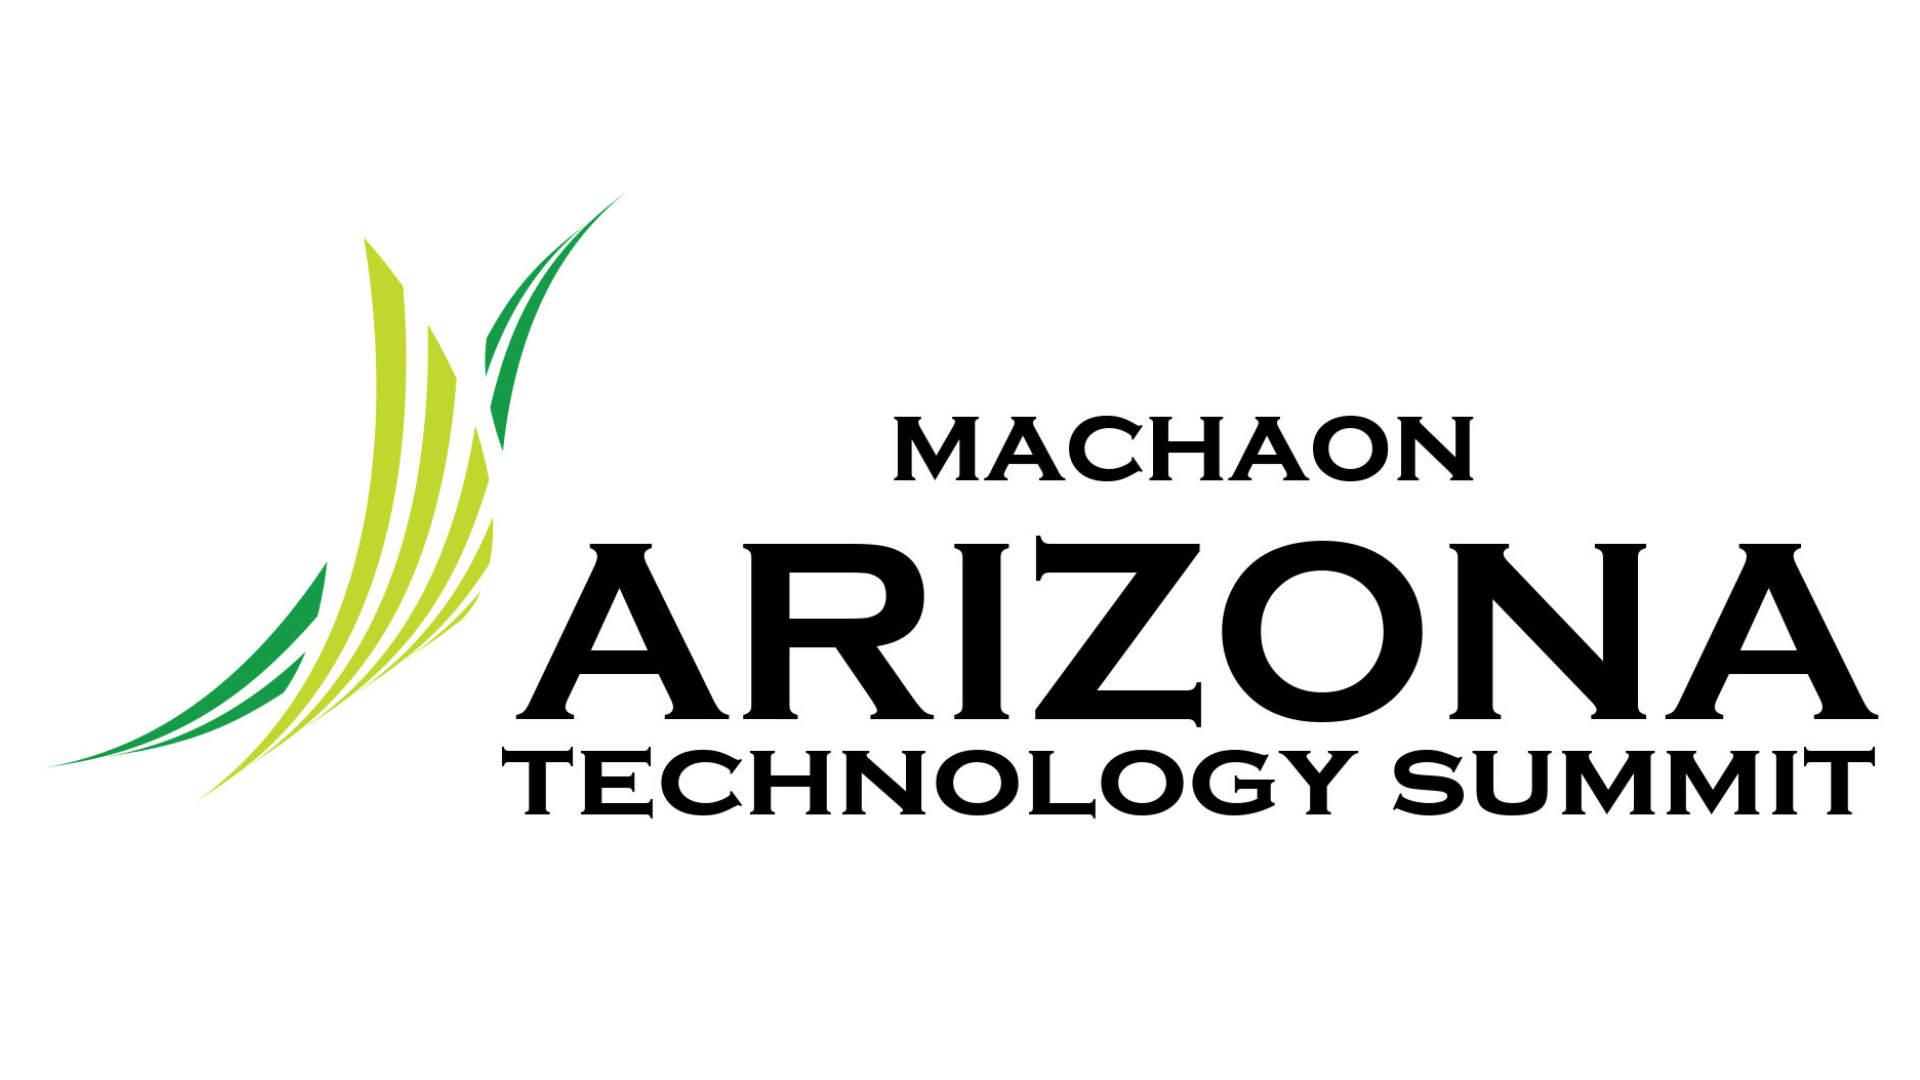 Arizona Technology Summit logo